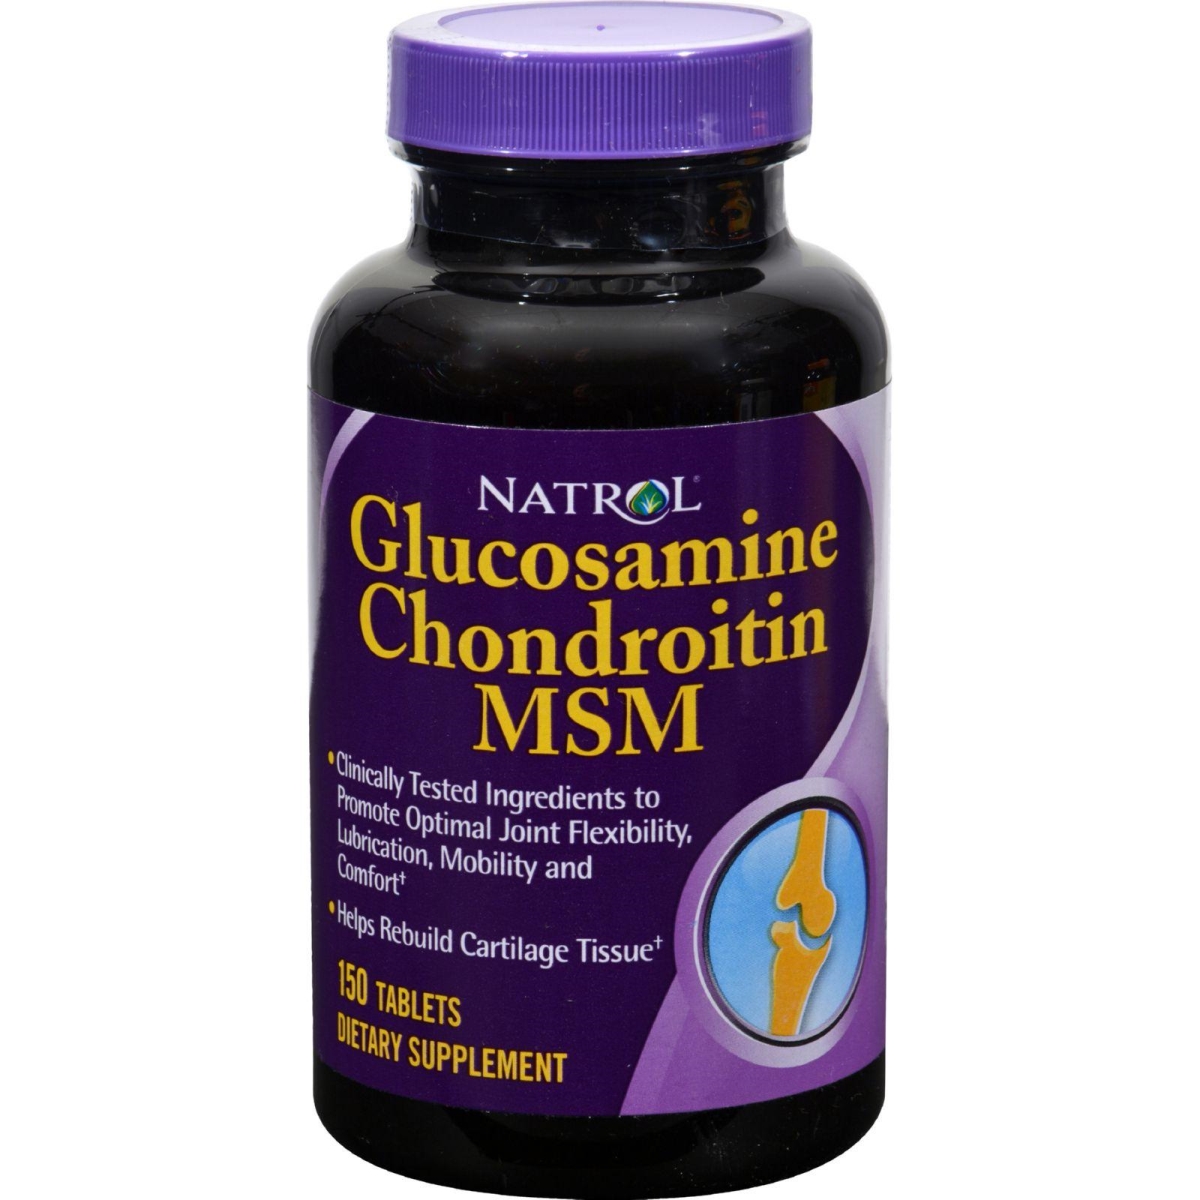 Hg0501247 Glucosamine Chondroitin & Msm - 150 Tablets